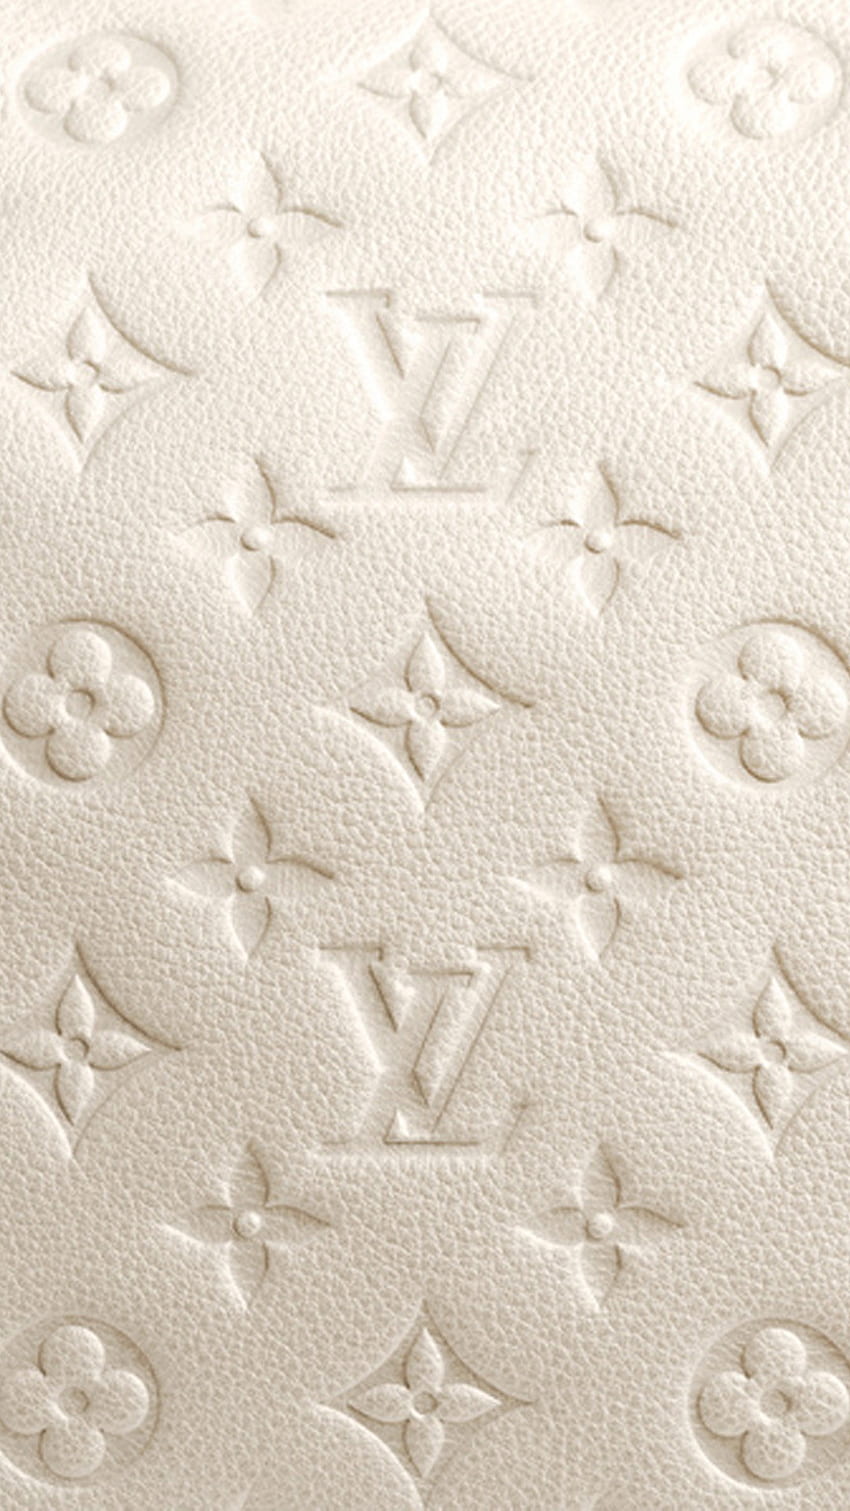 Cute Louis Vuitton Wallpapers